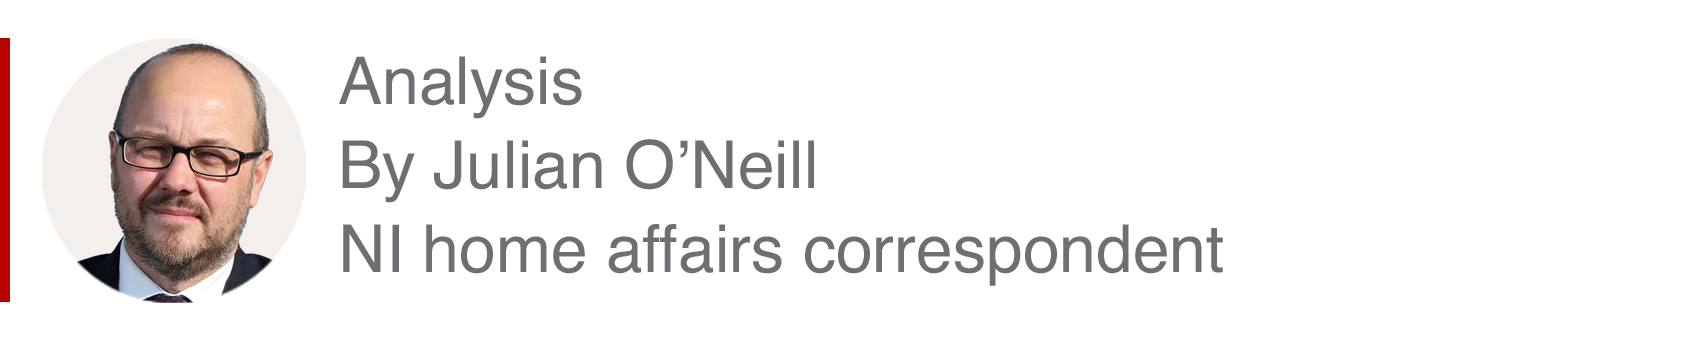 Analysis box by Julian O'Neill, NI home affairs correspondent